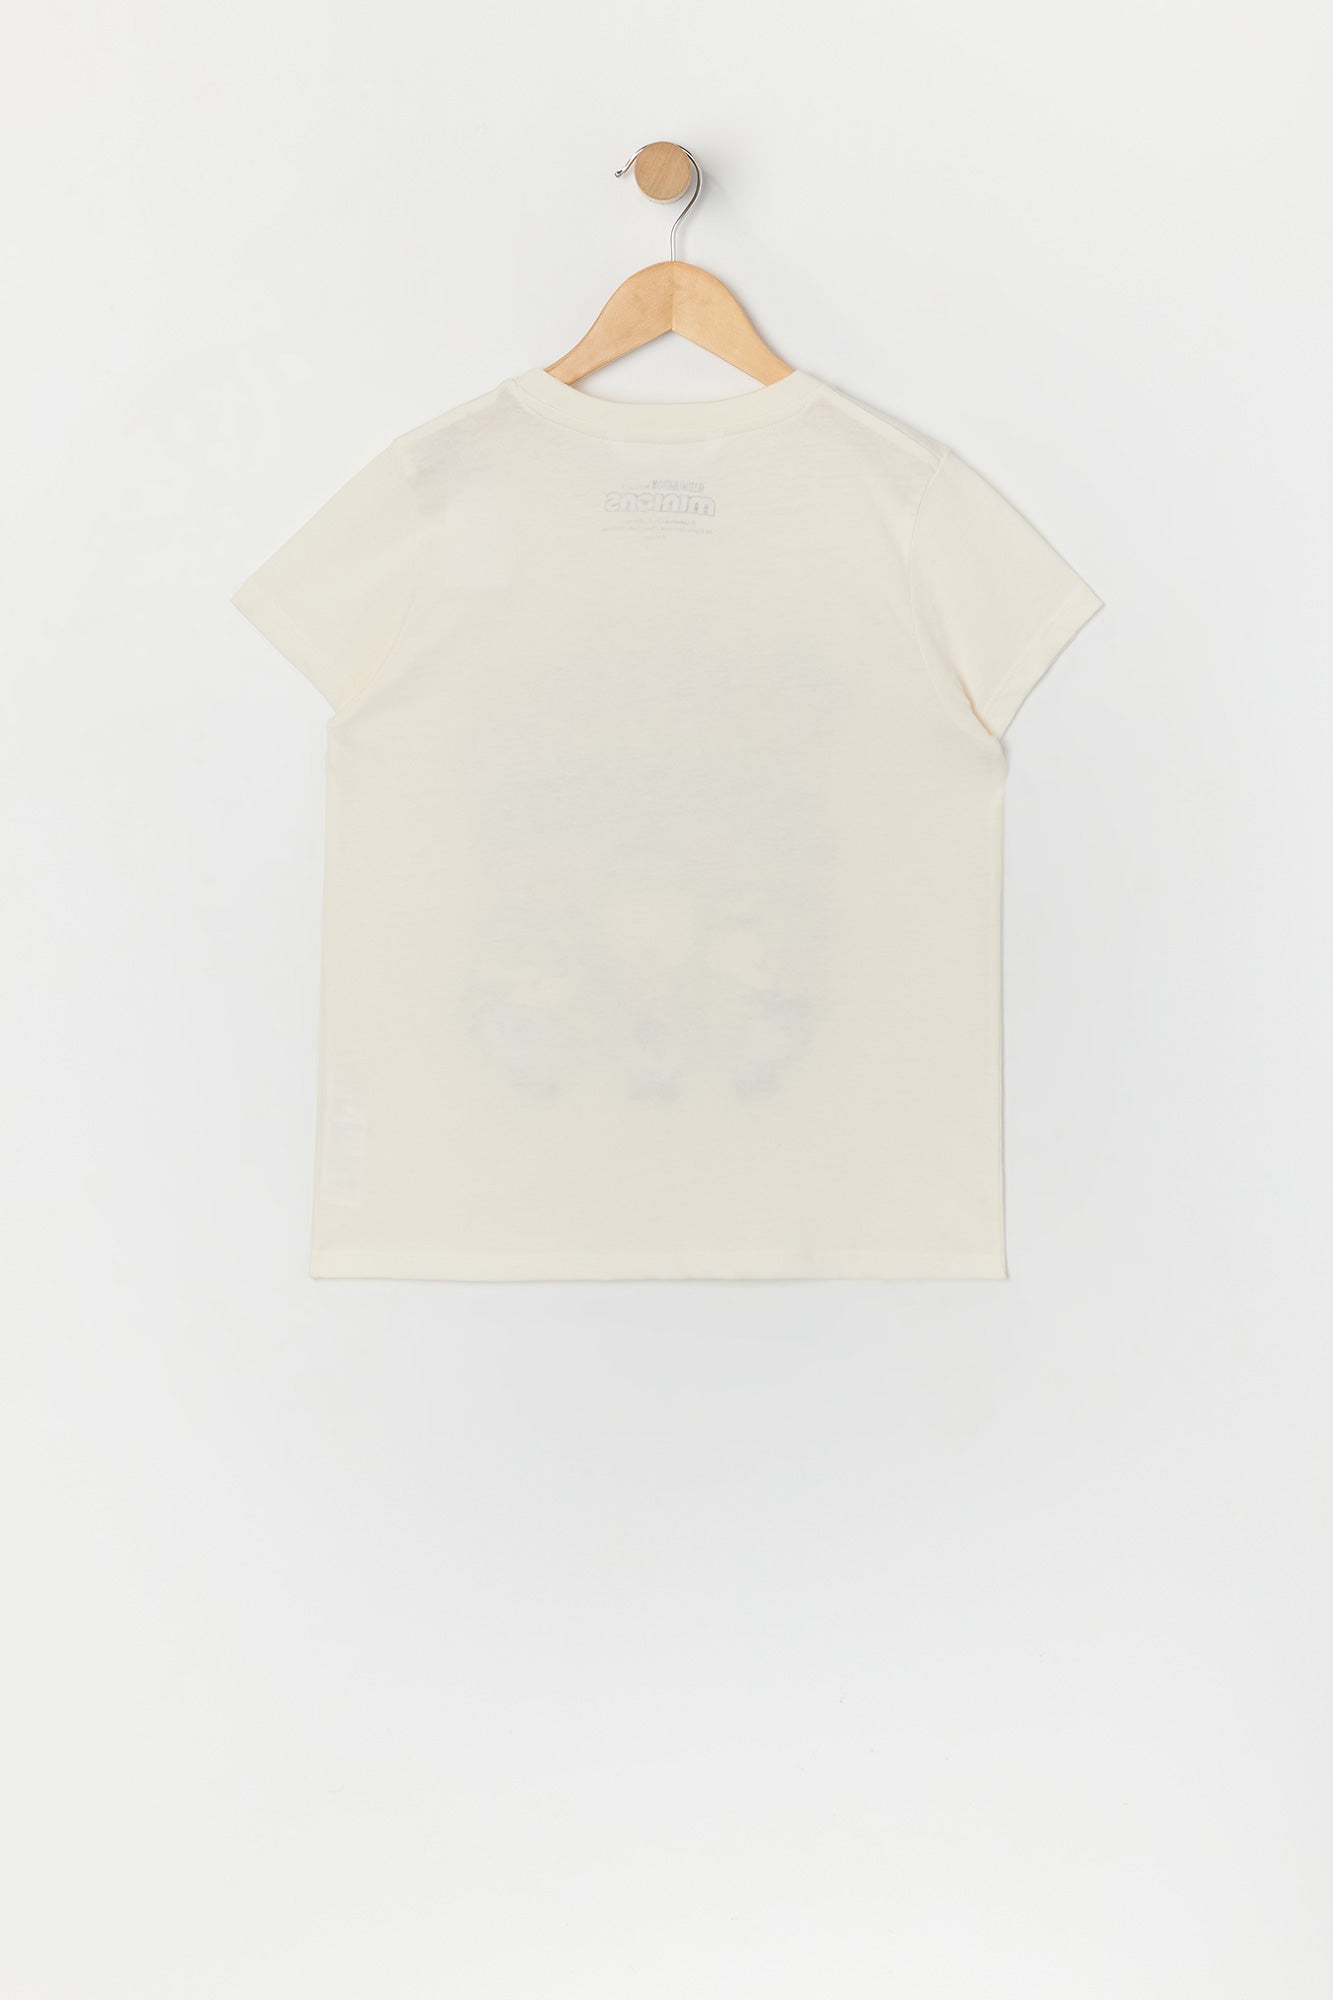 Girls Always Sunny Minions Graphic T-Shirt